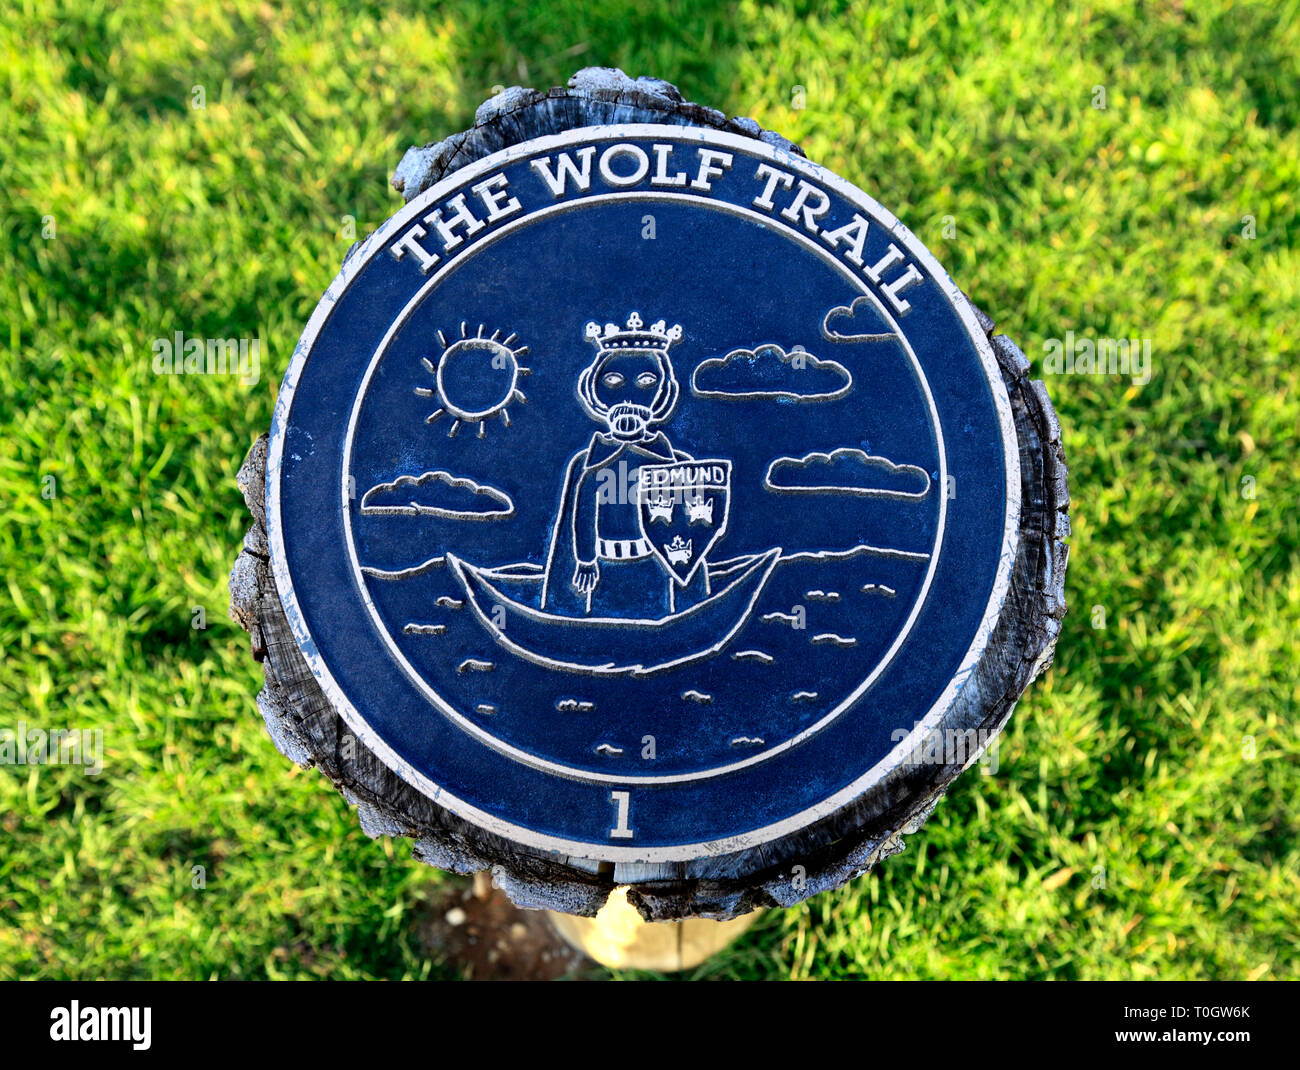 St. Edmund, The Wolf Trail, Esplanade Gardens, Hunstanton, Norfolk, UK, commemorative, plaque Stock Photo